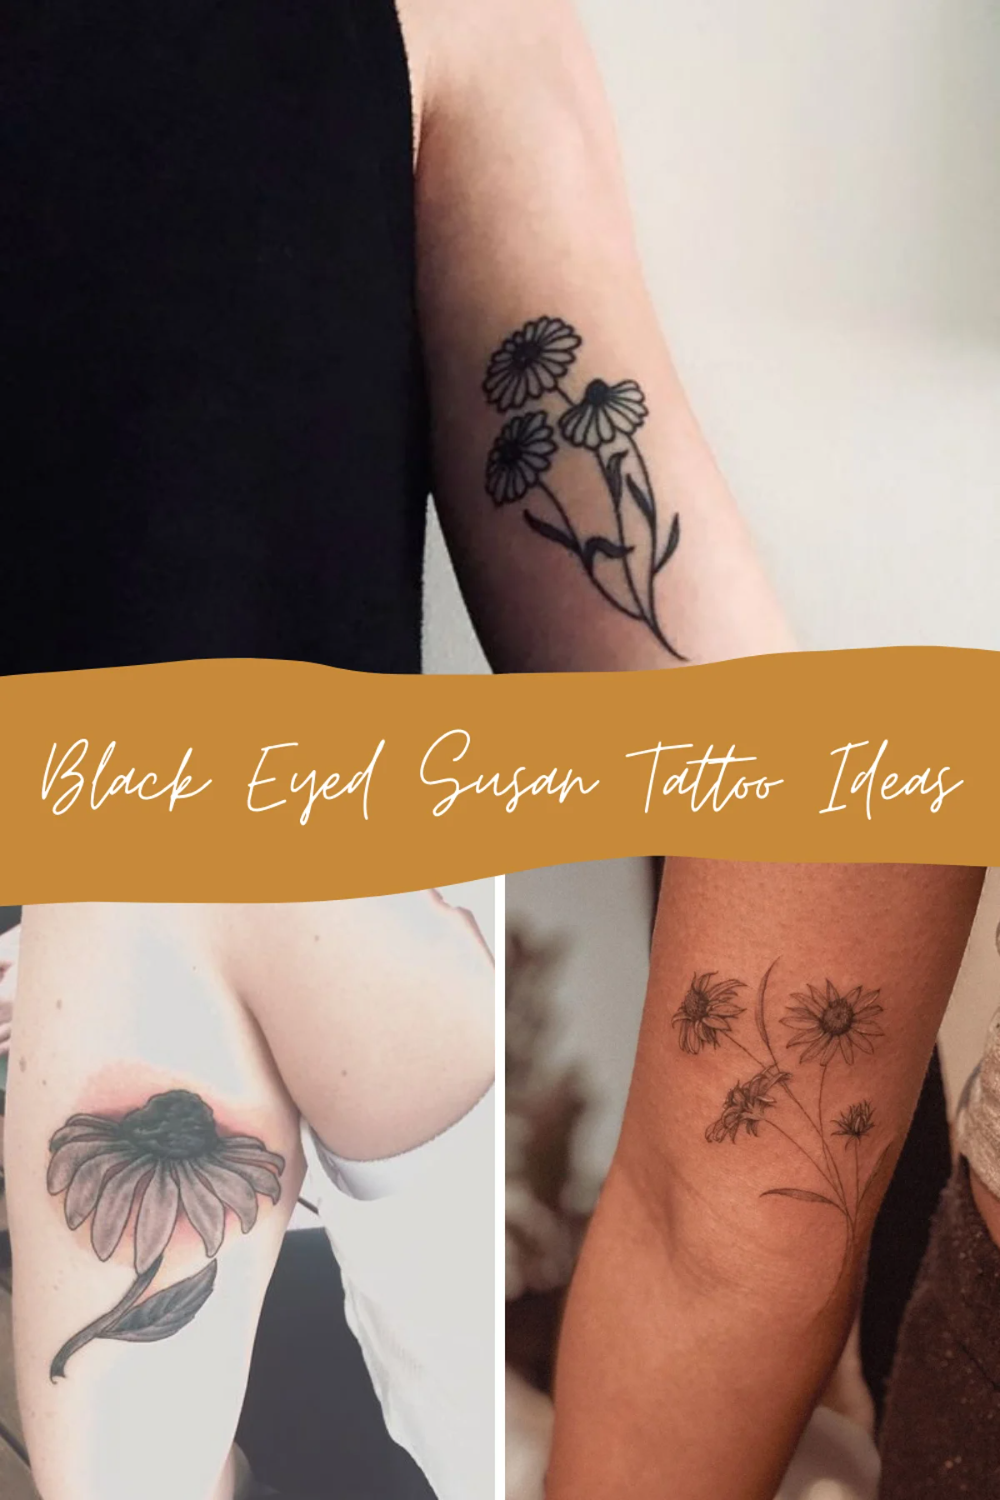 doreen imelda recommends Black Eyed Susan Tattoo Designs